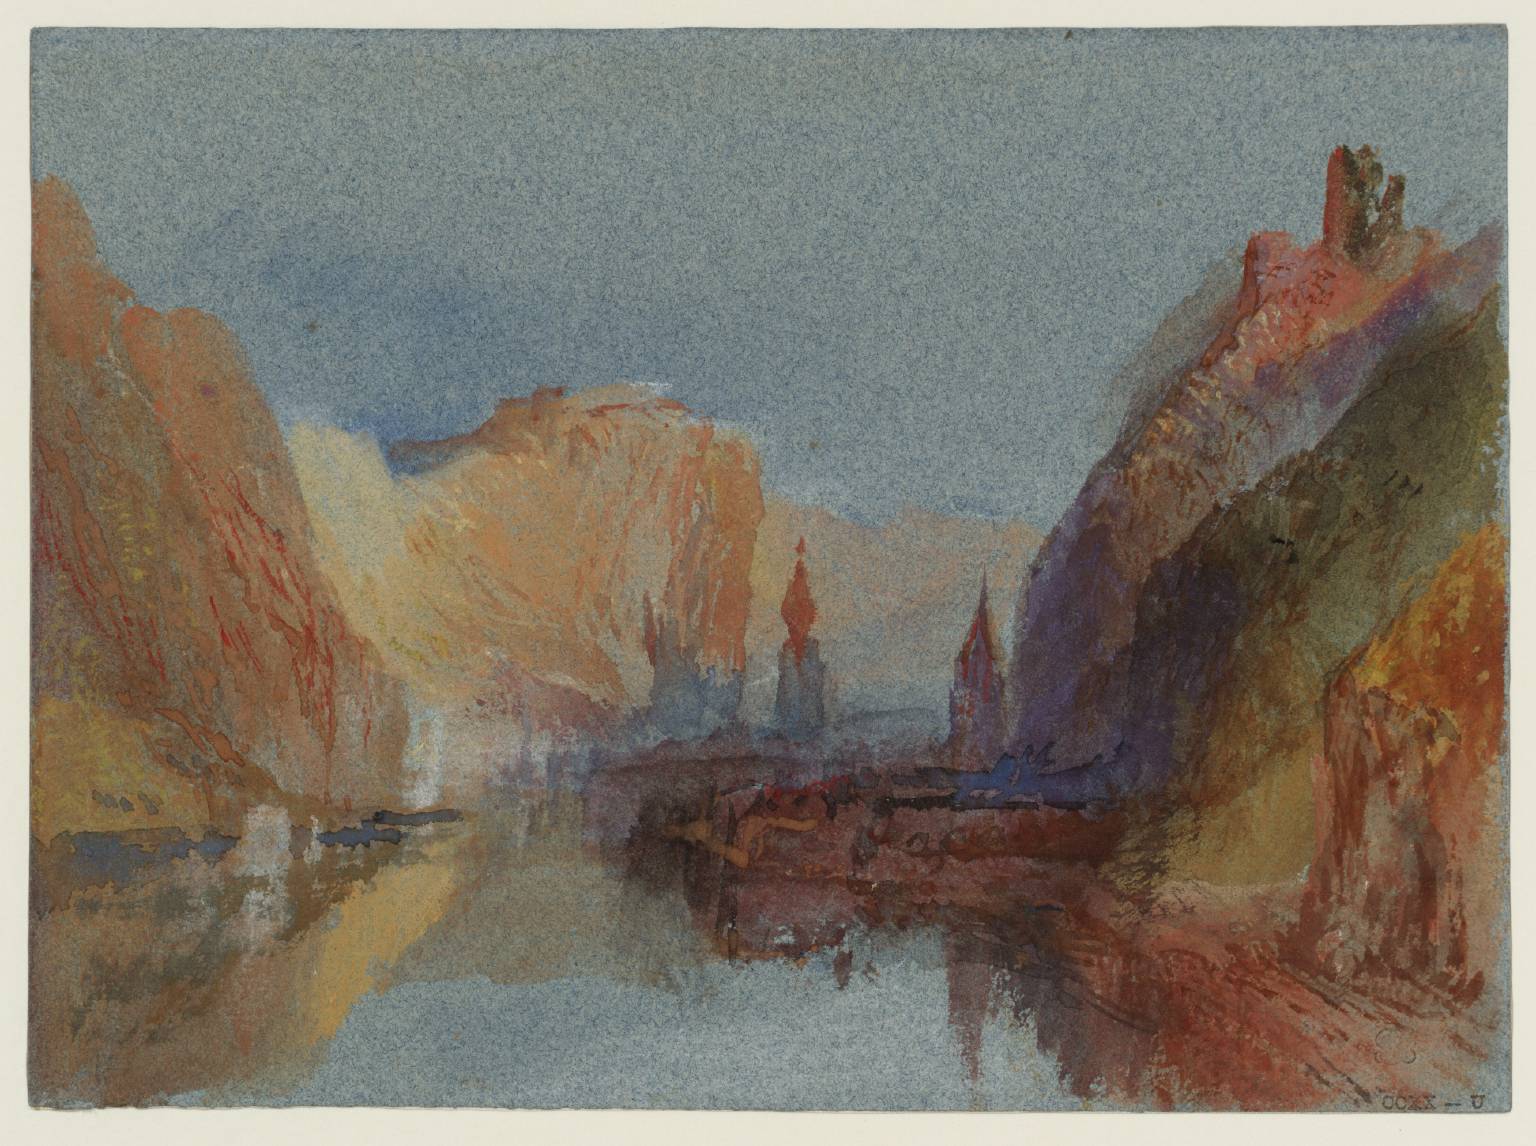 Dinant, Bouvignes and Crèvecoeur: Sunset circa 1839 by Joseph Mallord William Turner 1775-1851